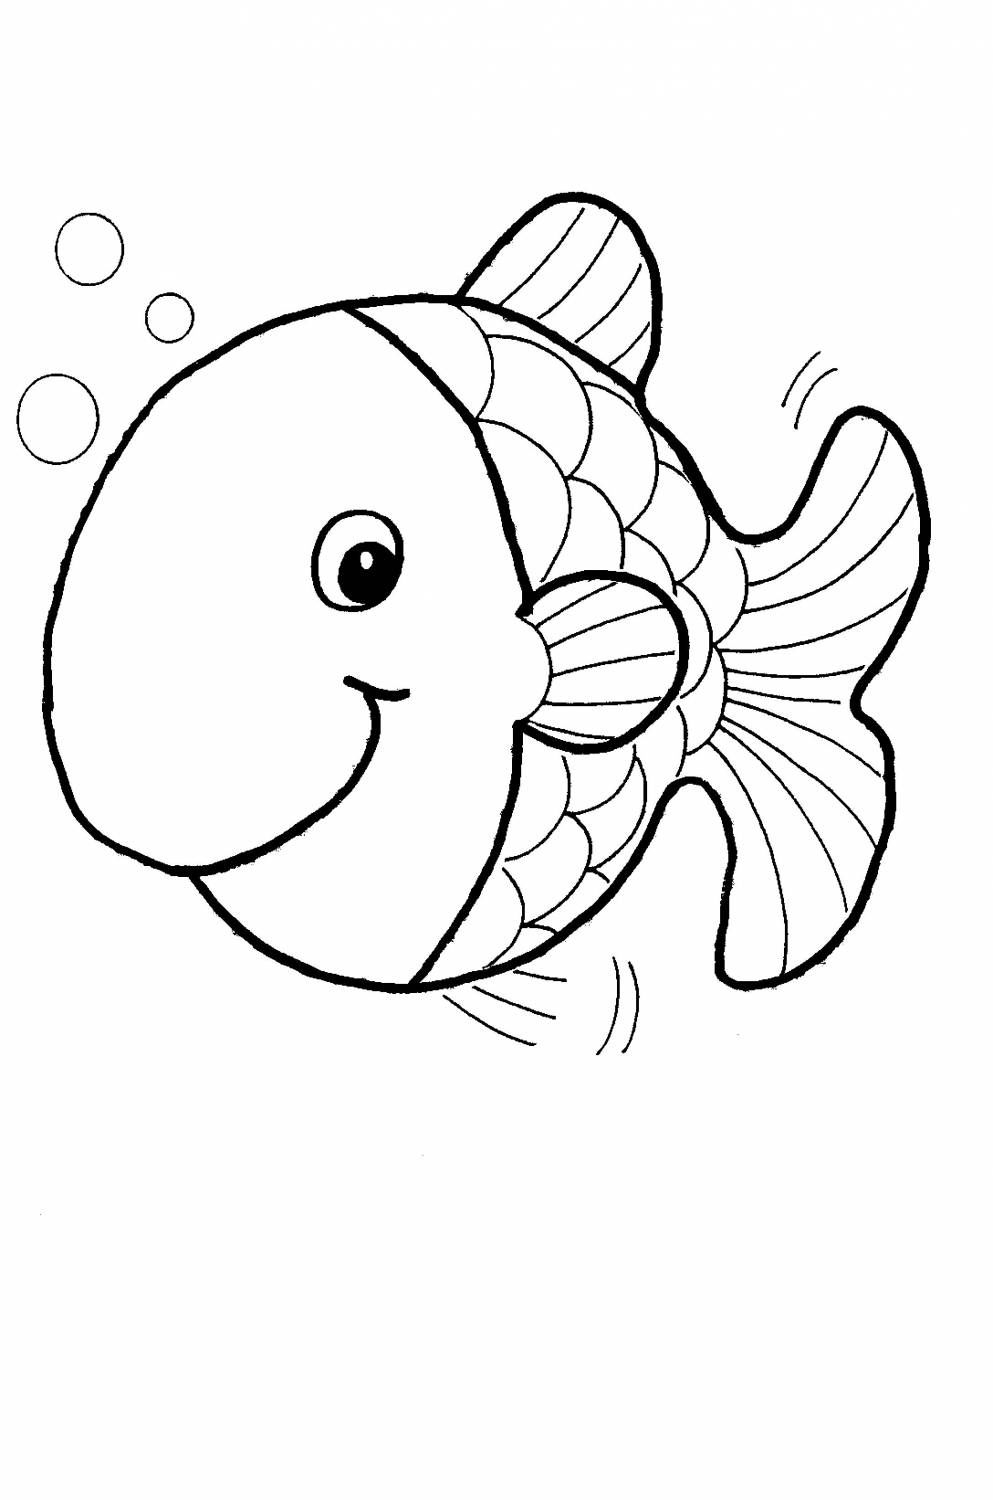 Раскраски рыбки для детей 3 4 лет. Раскраска рыбка. Рыбка раскраска для детей. Рыба клоун раскраска для детей. Рыбка картинка для детей раскраска.